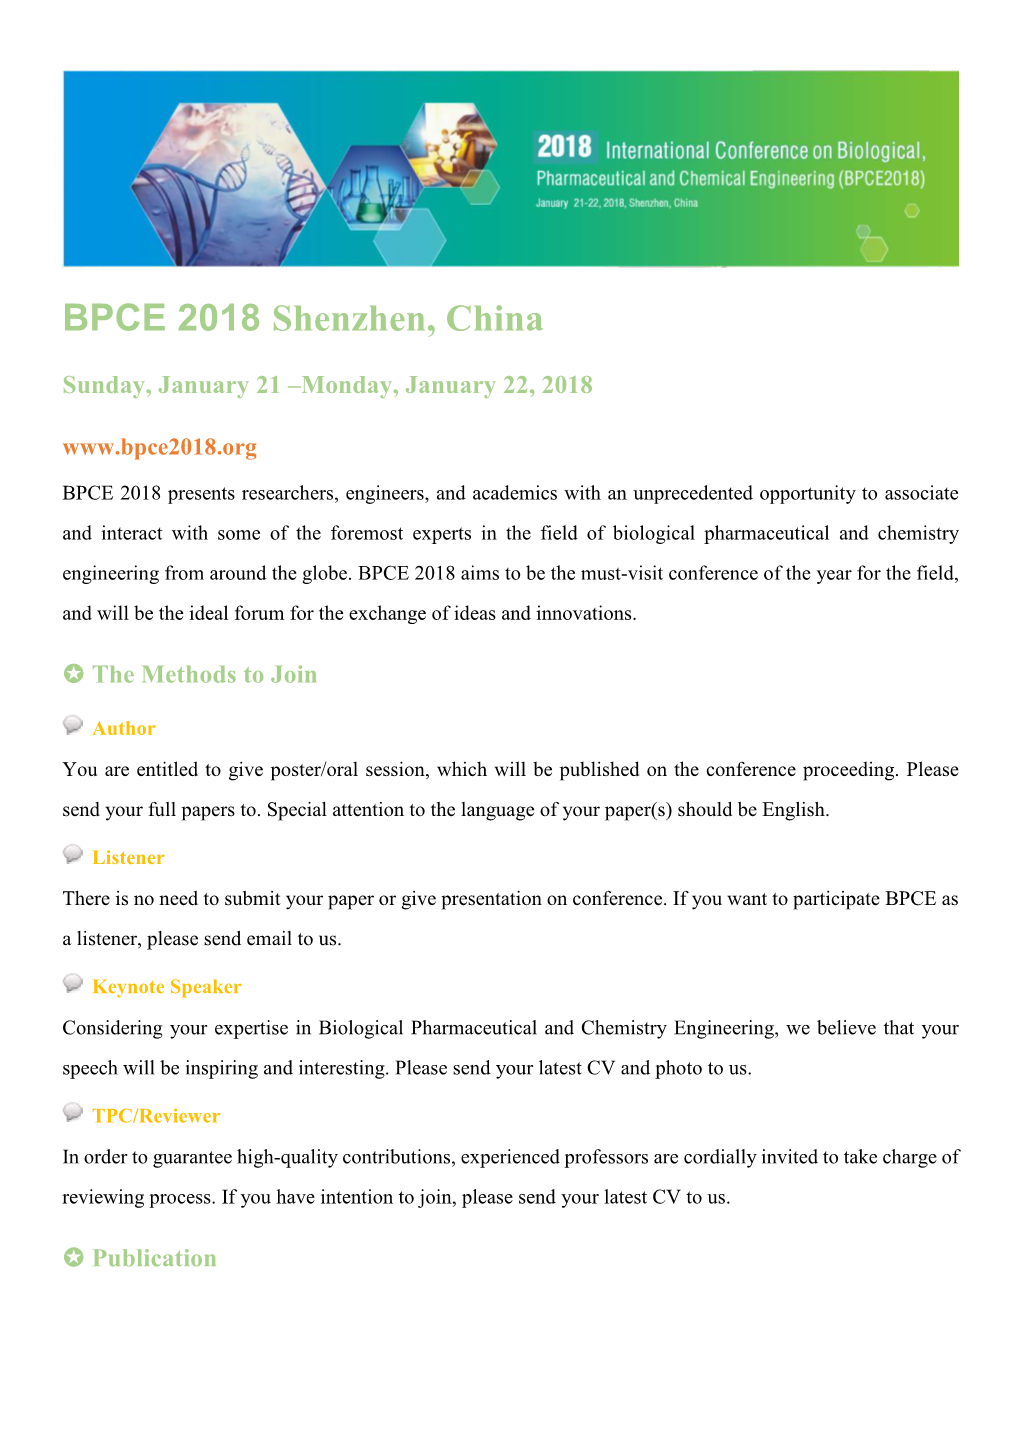 BPCE 2018 Shenzhen, China